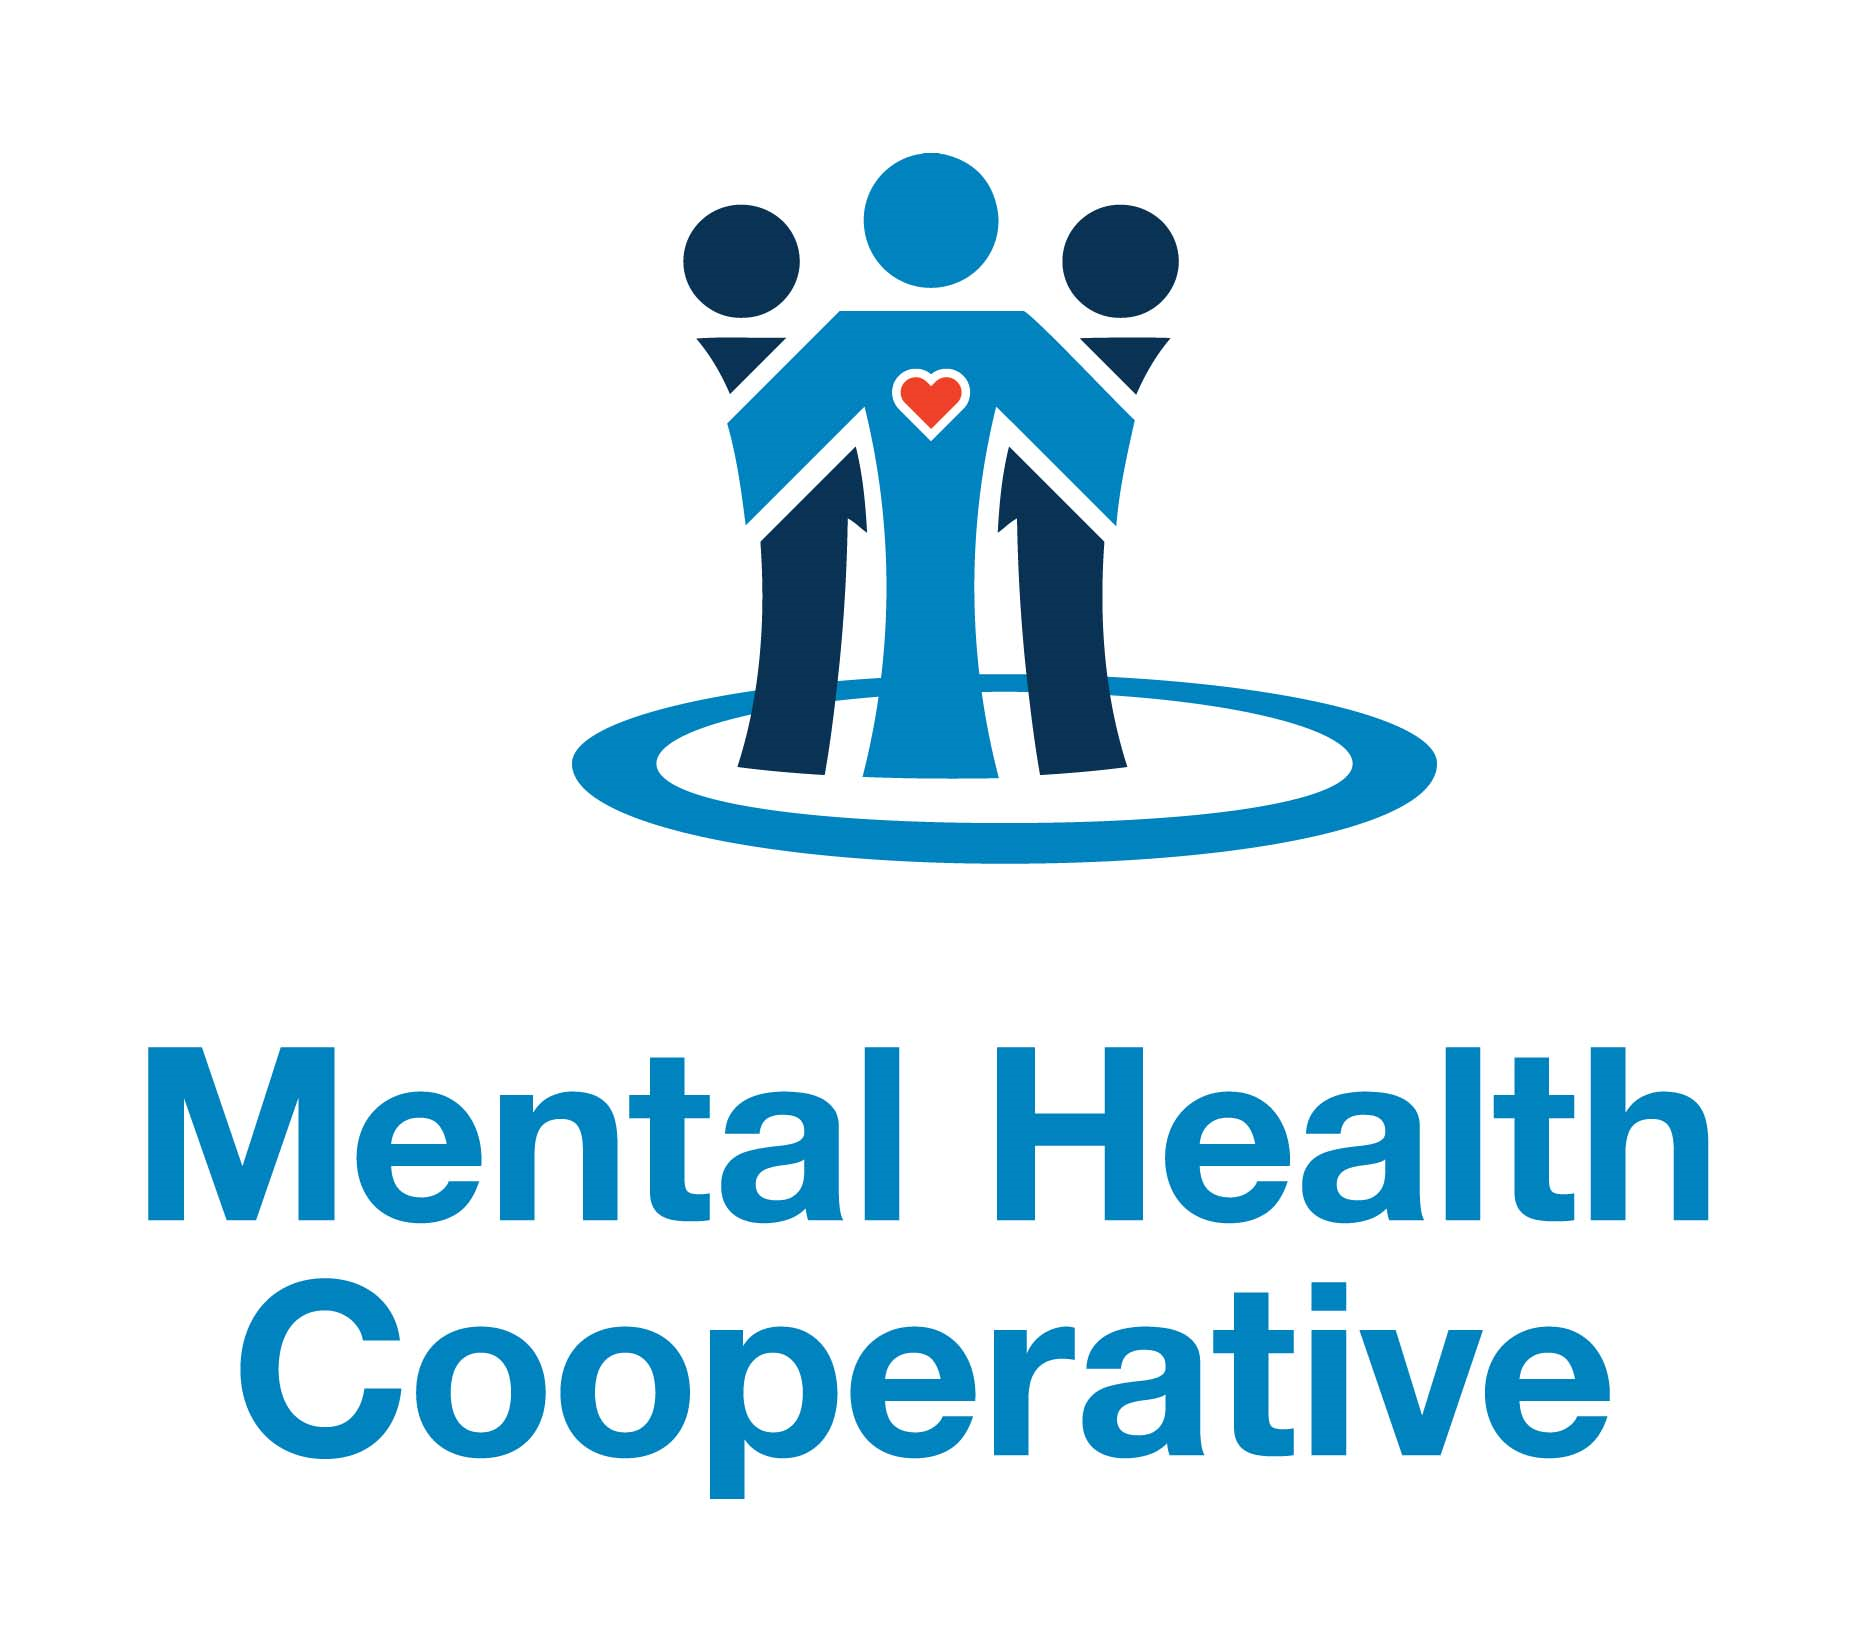 Mental Health Cooperative Company Logo